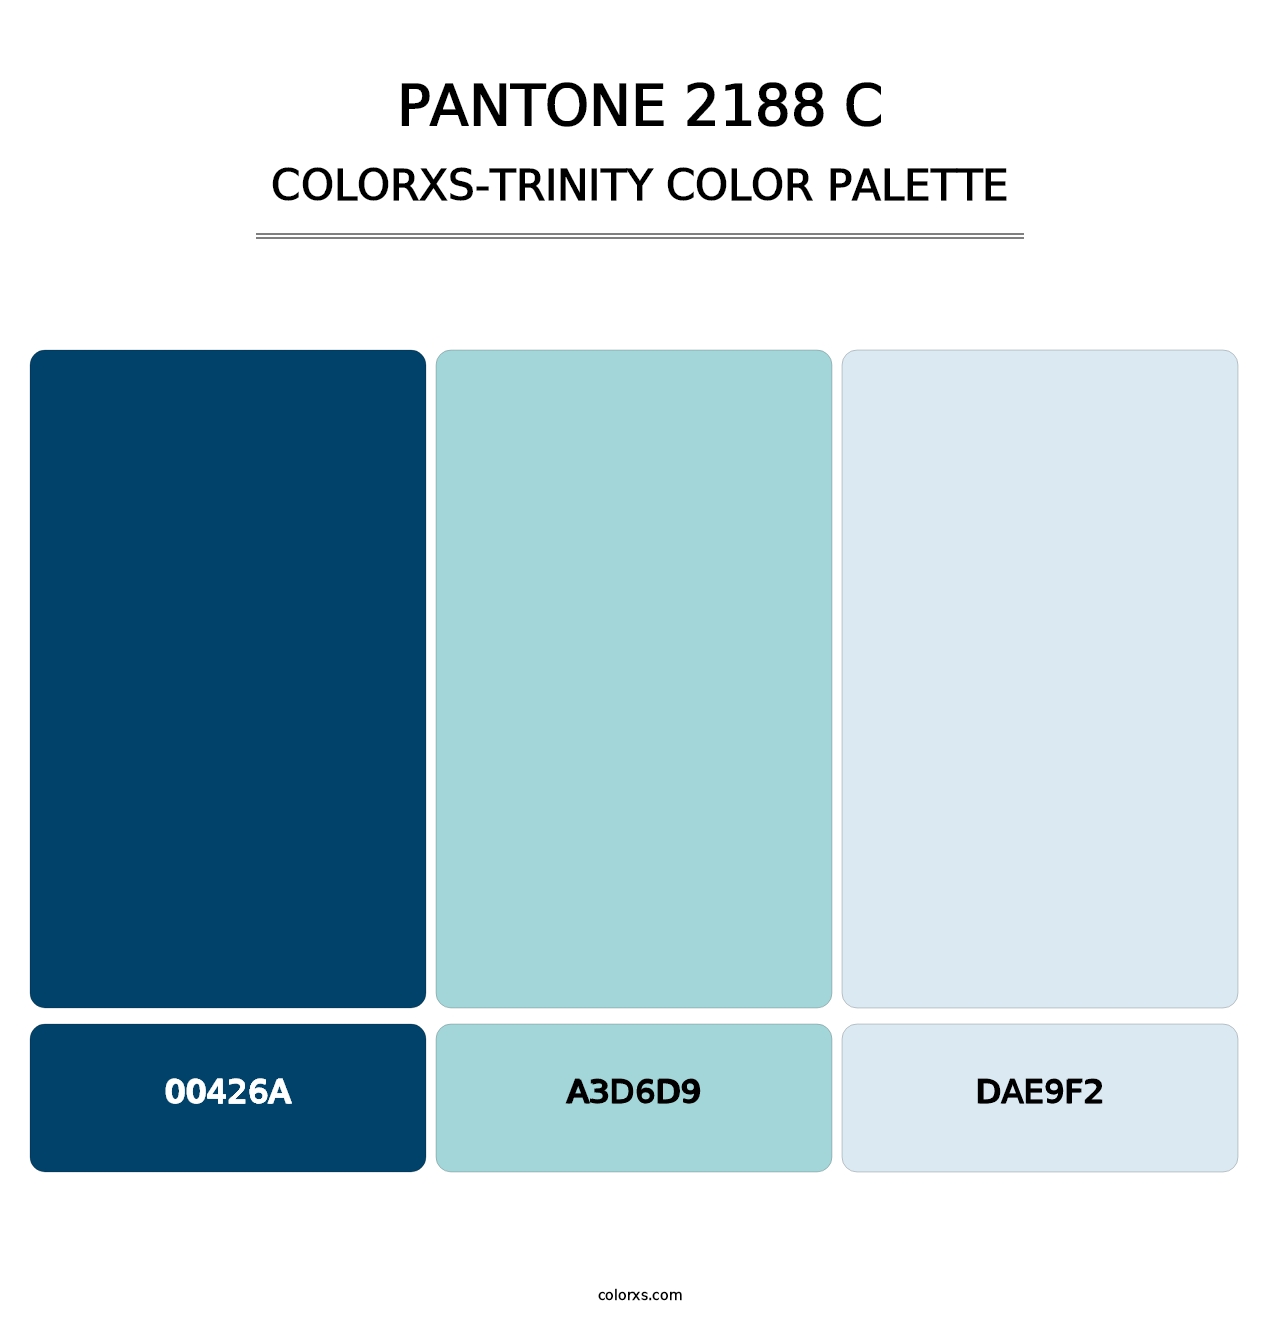 PANTONE 2188 C - Colorxs Trinity Palette